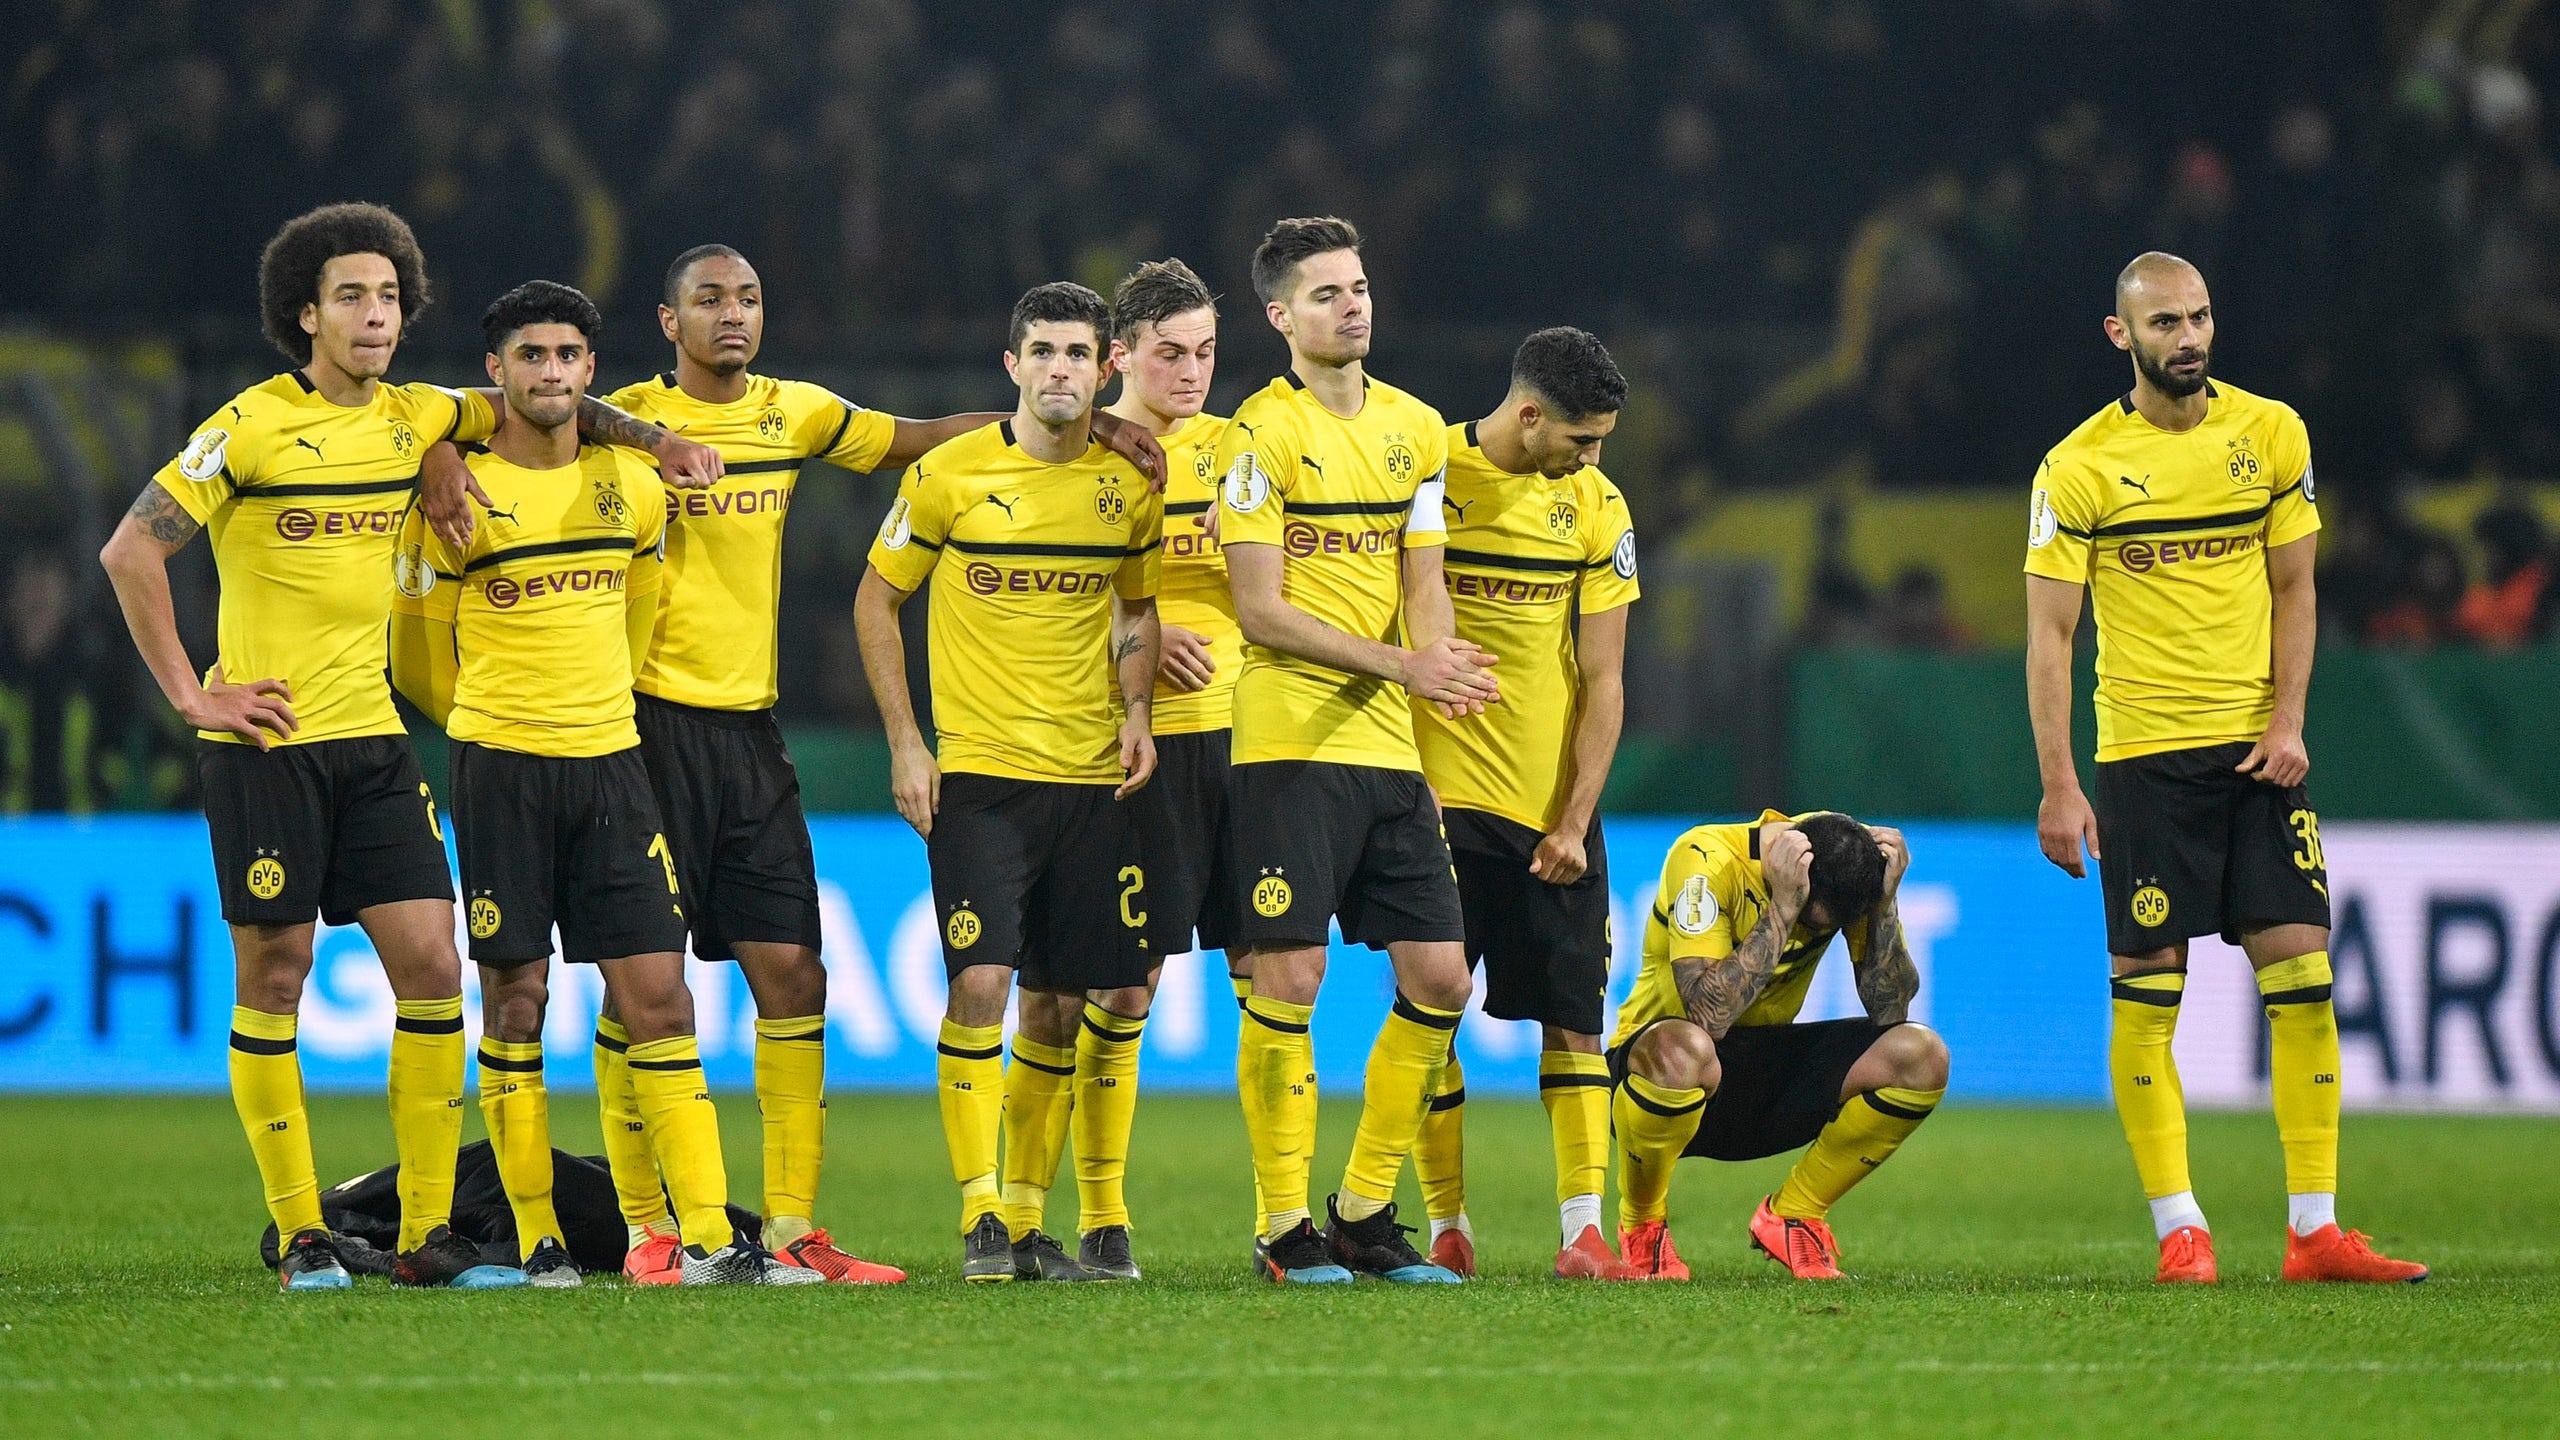 Title hopes on the line for Dortmund as Leverkusen visits | FOX Sports